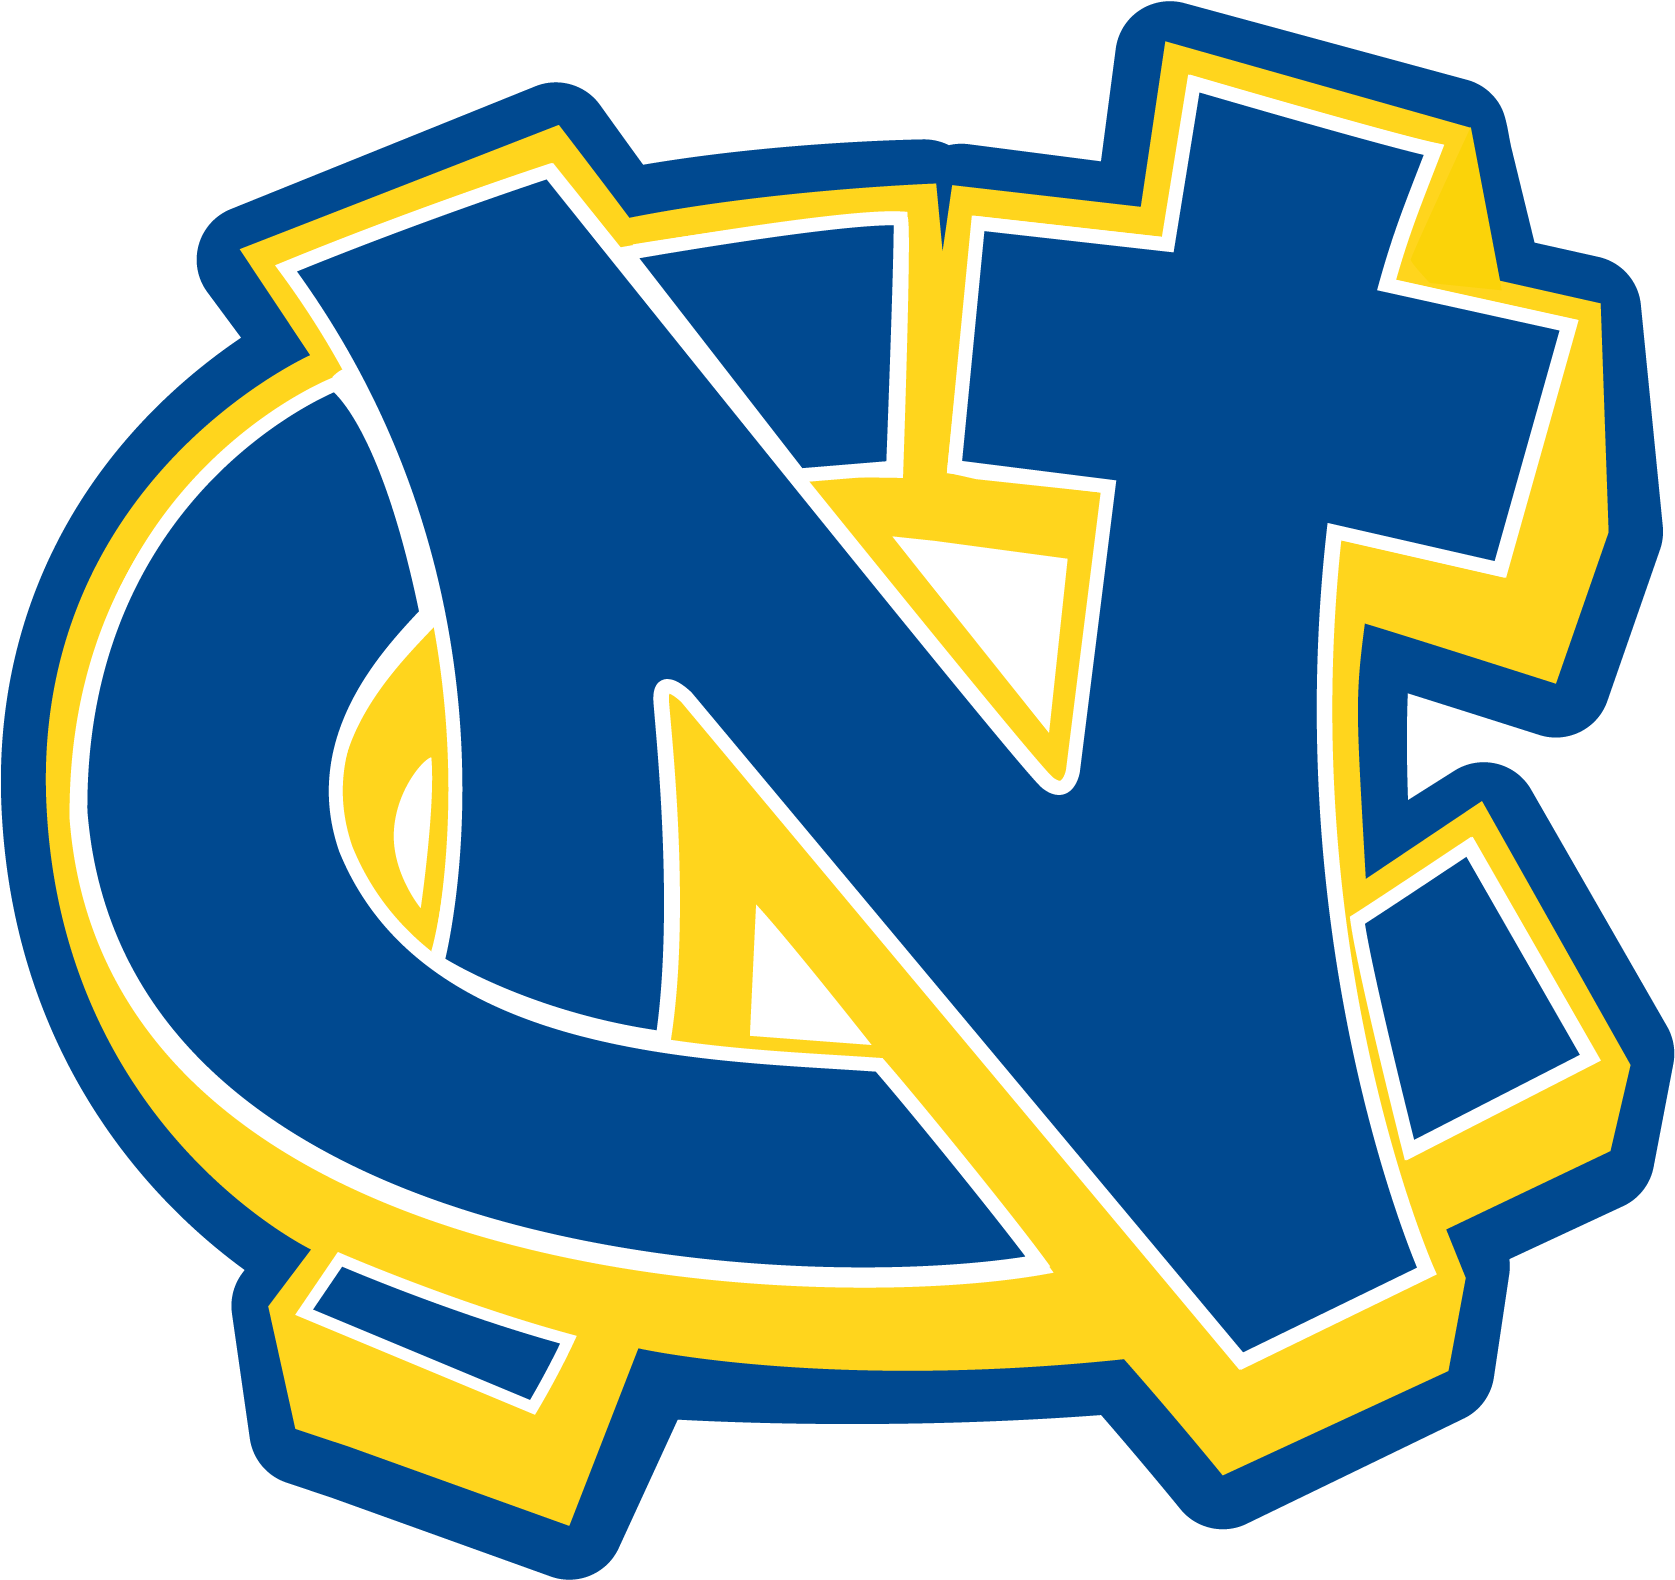 School Logo Image - Northpointe Christian High School (1800x1800)